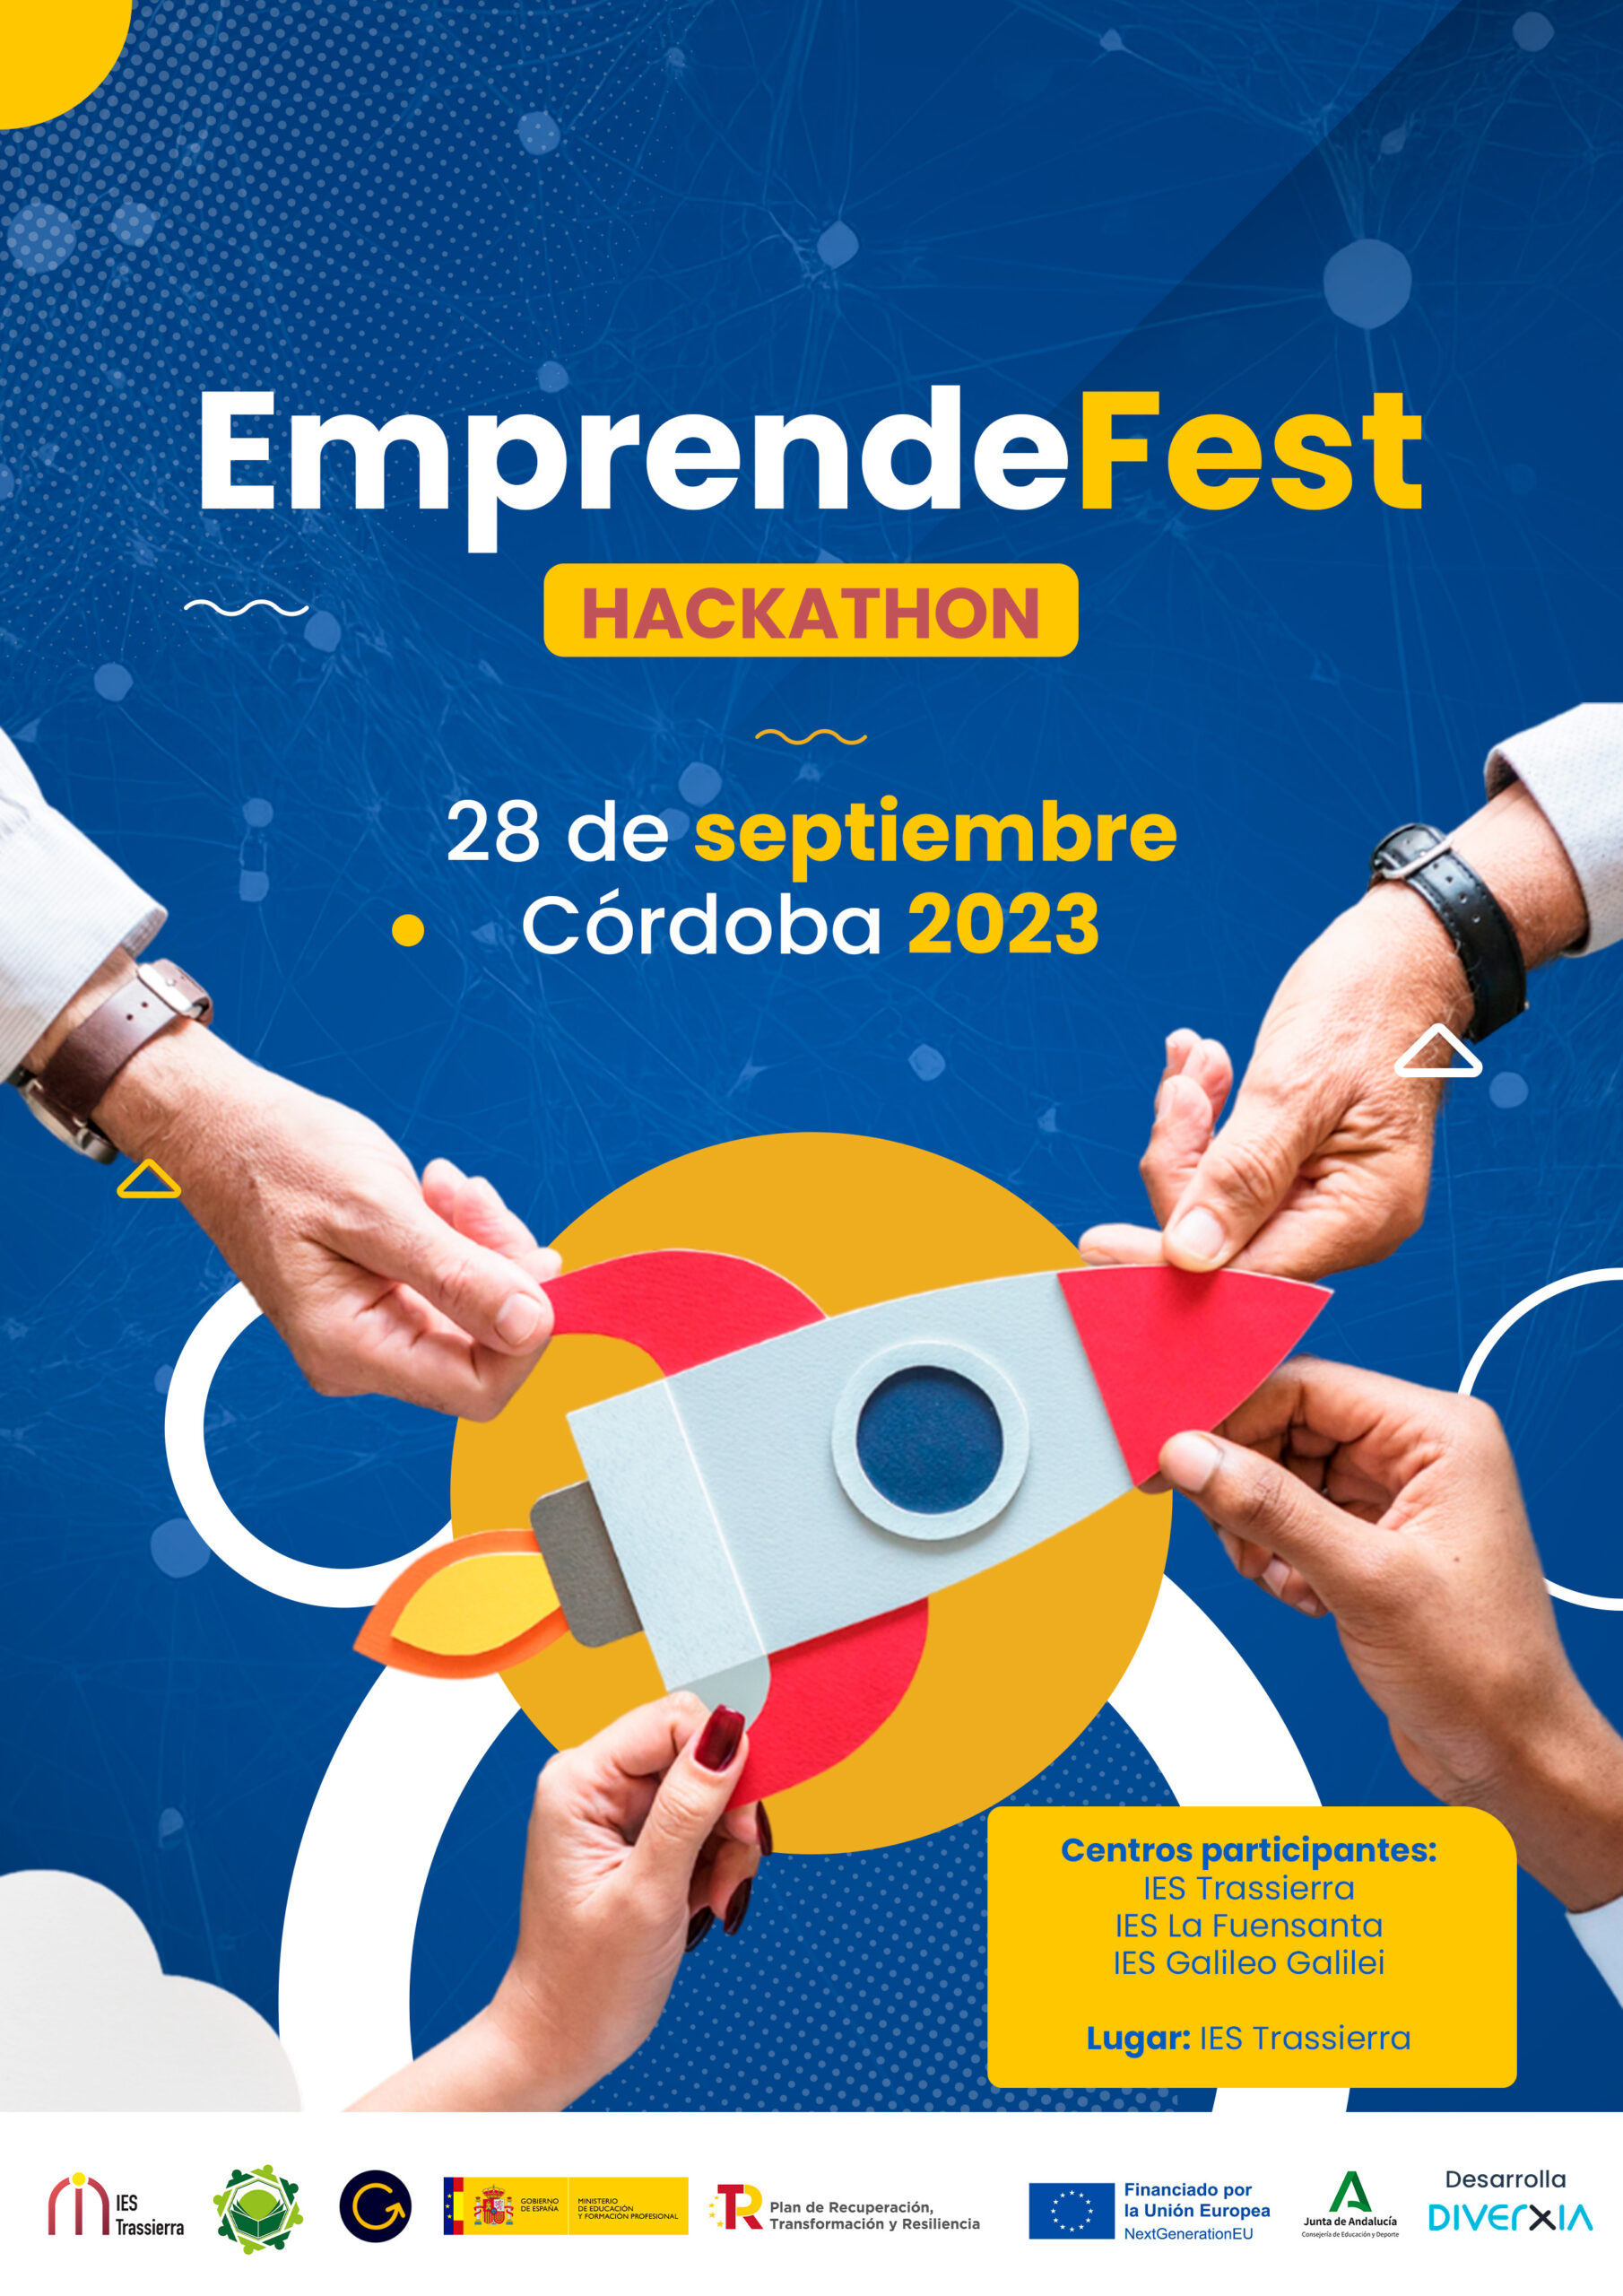 Hackathon EmprendeFest córdoba